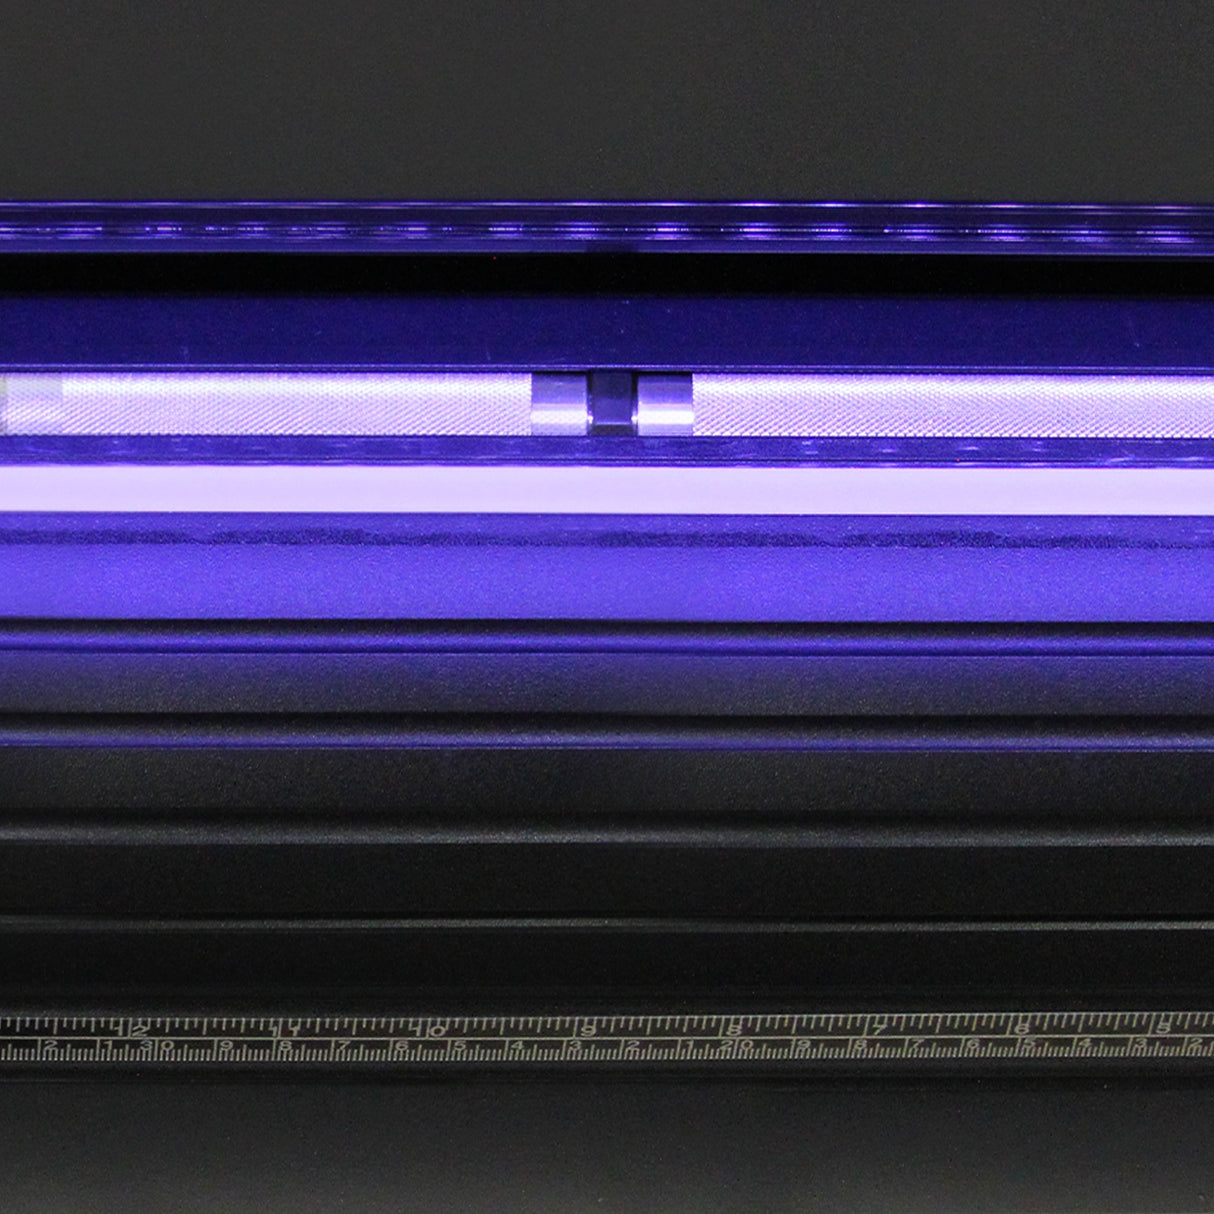 Plotter per Taglio Vinile & Software SignCut Pro - LED - 360mm